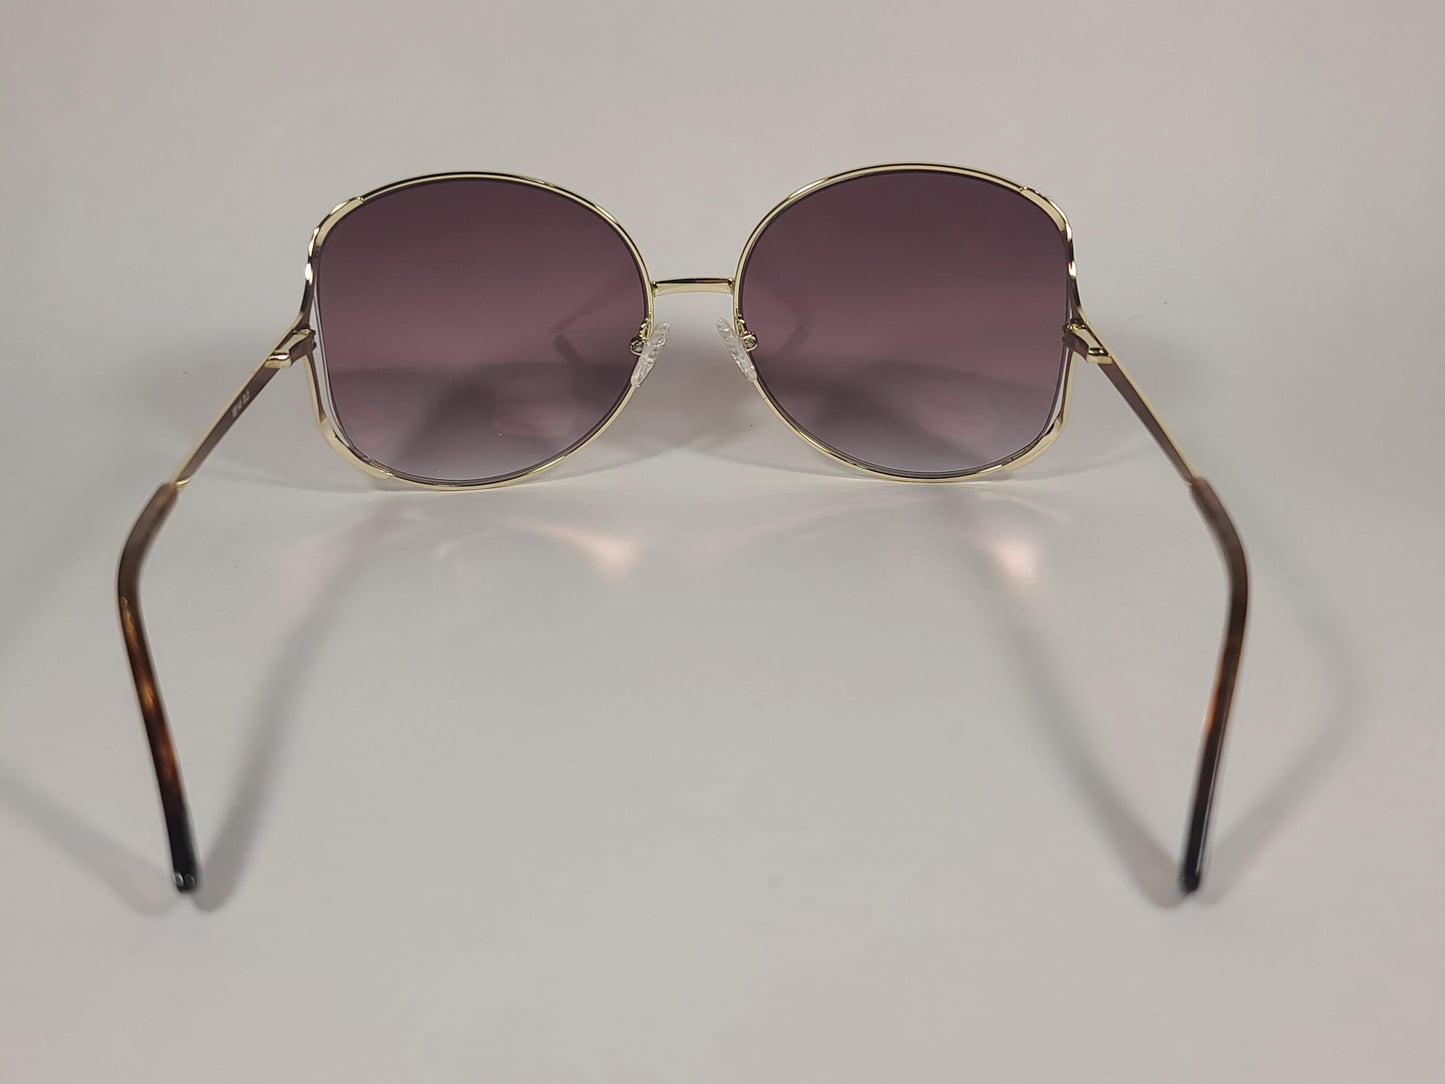 Sam Edelman Oversize Vented Sunglasses Gold Tone Frame Gold Mirror Lens SE145 GLD - Sunglasses